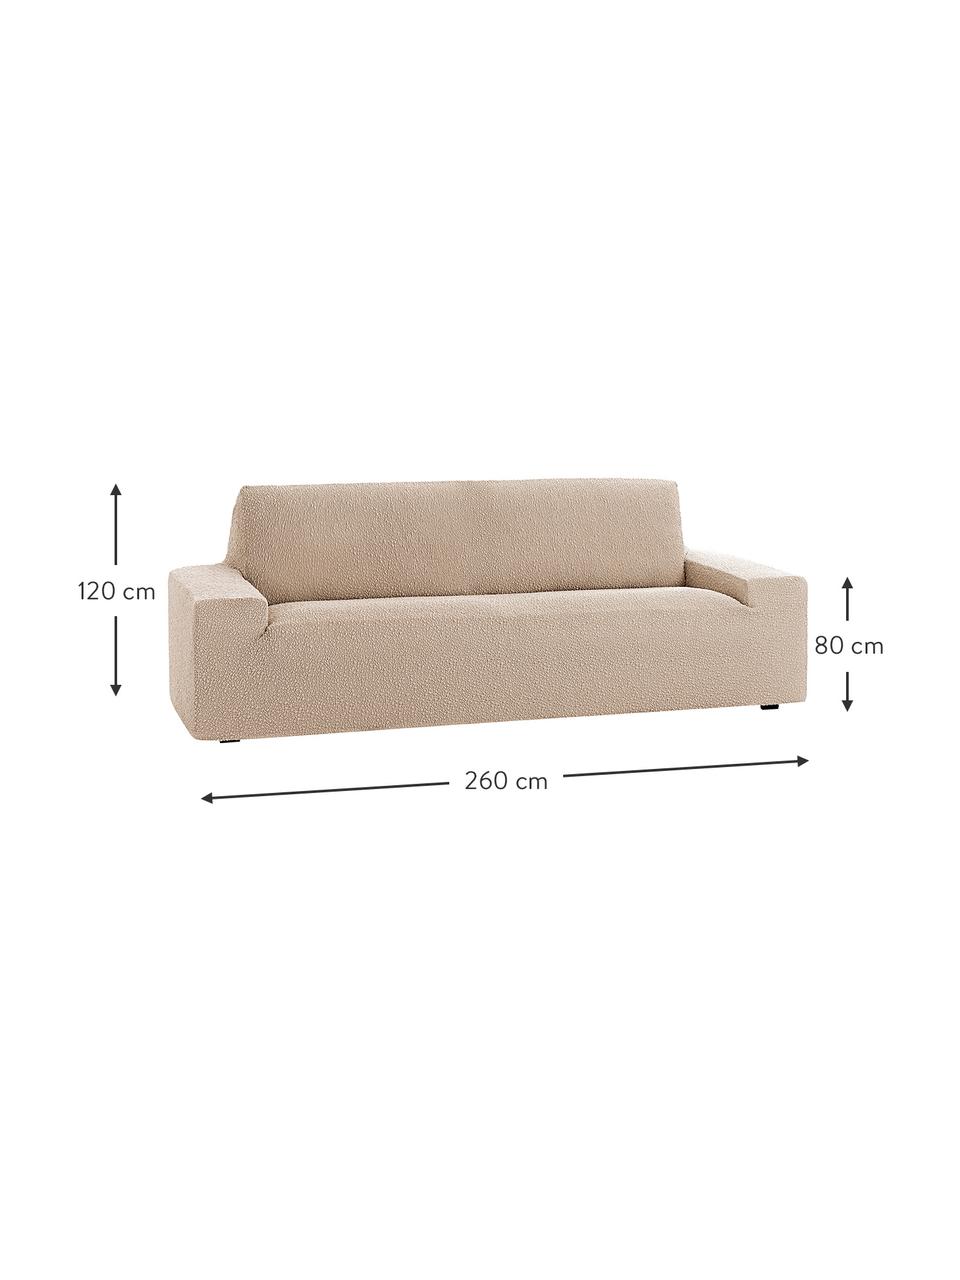 Funda de sofá Roc, 55% poliéster, 35% algodón, 10% elastómero, Beige, An 120 x Al 260 cm